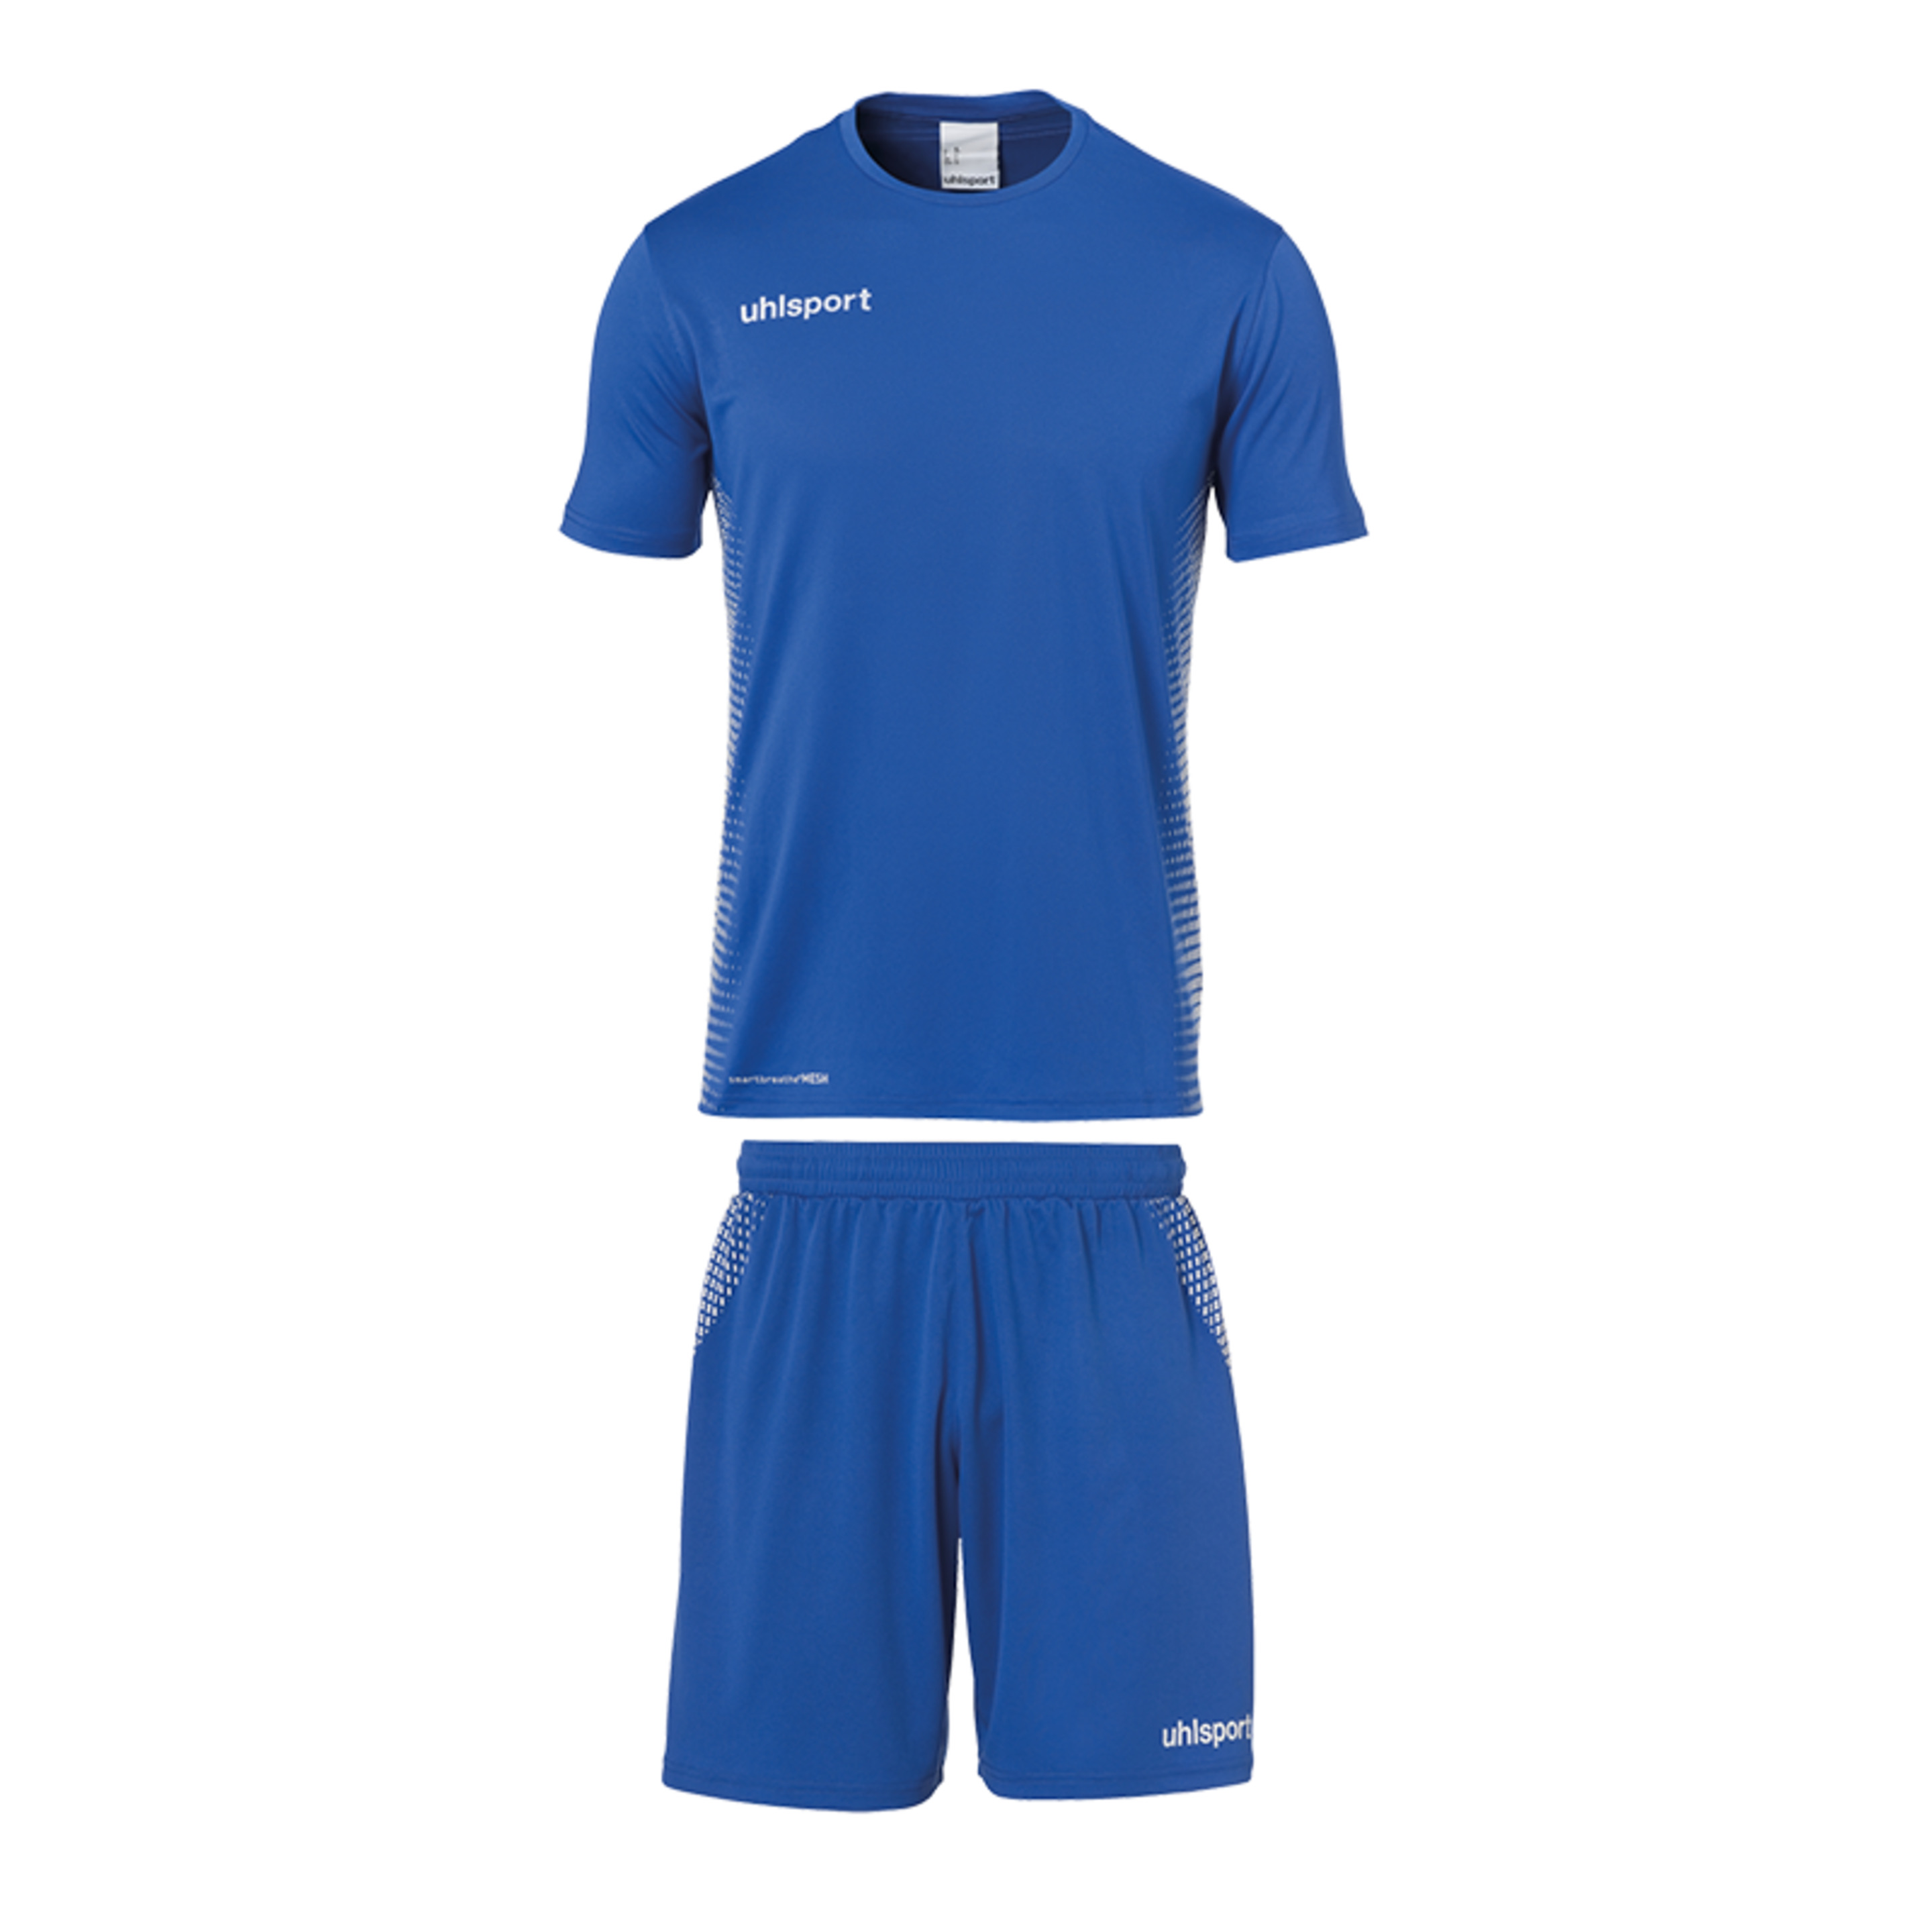 Score Kit Ss Azur/blanco Uhlsport